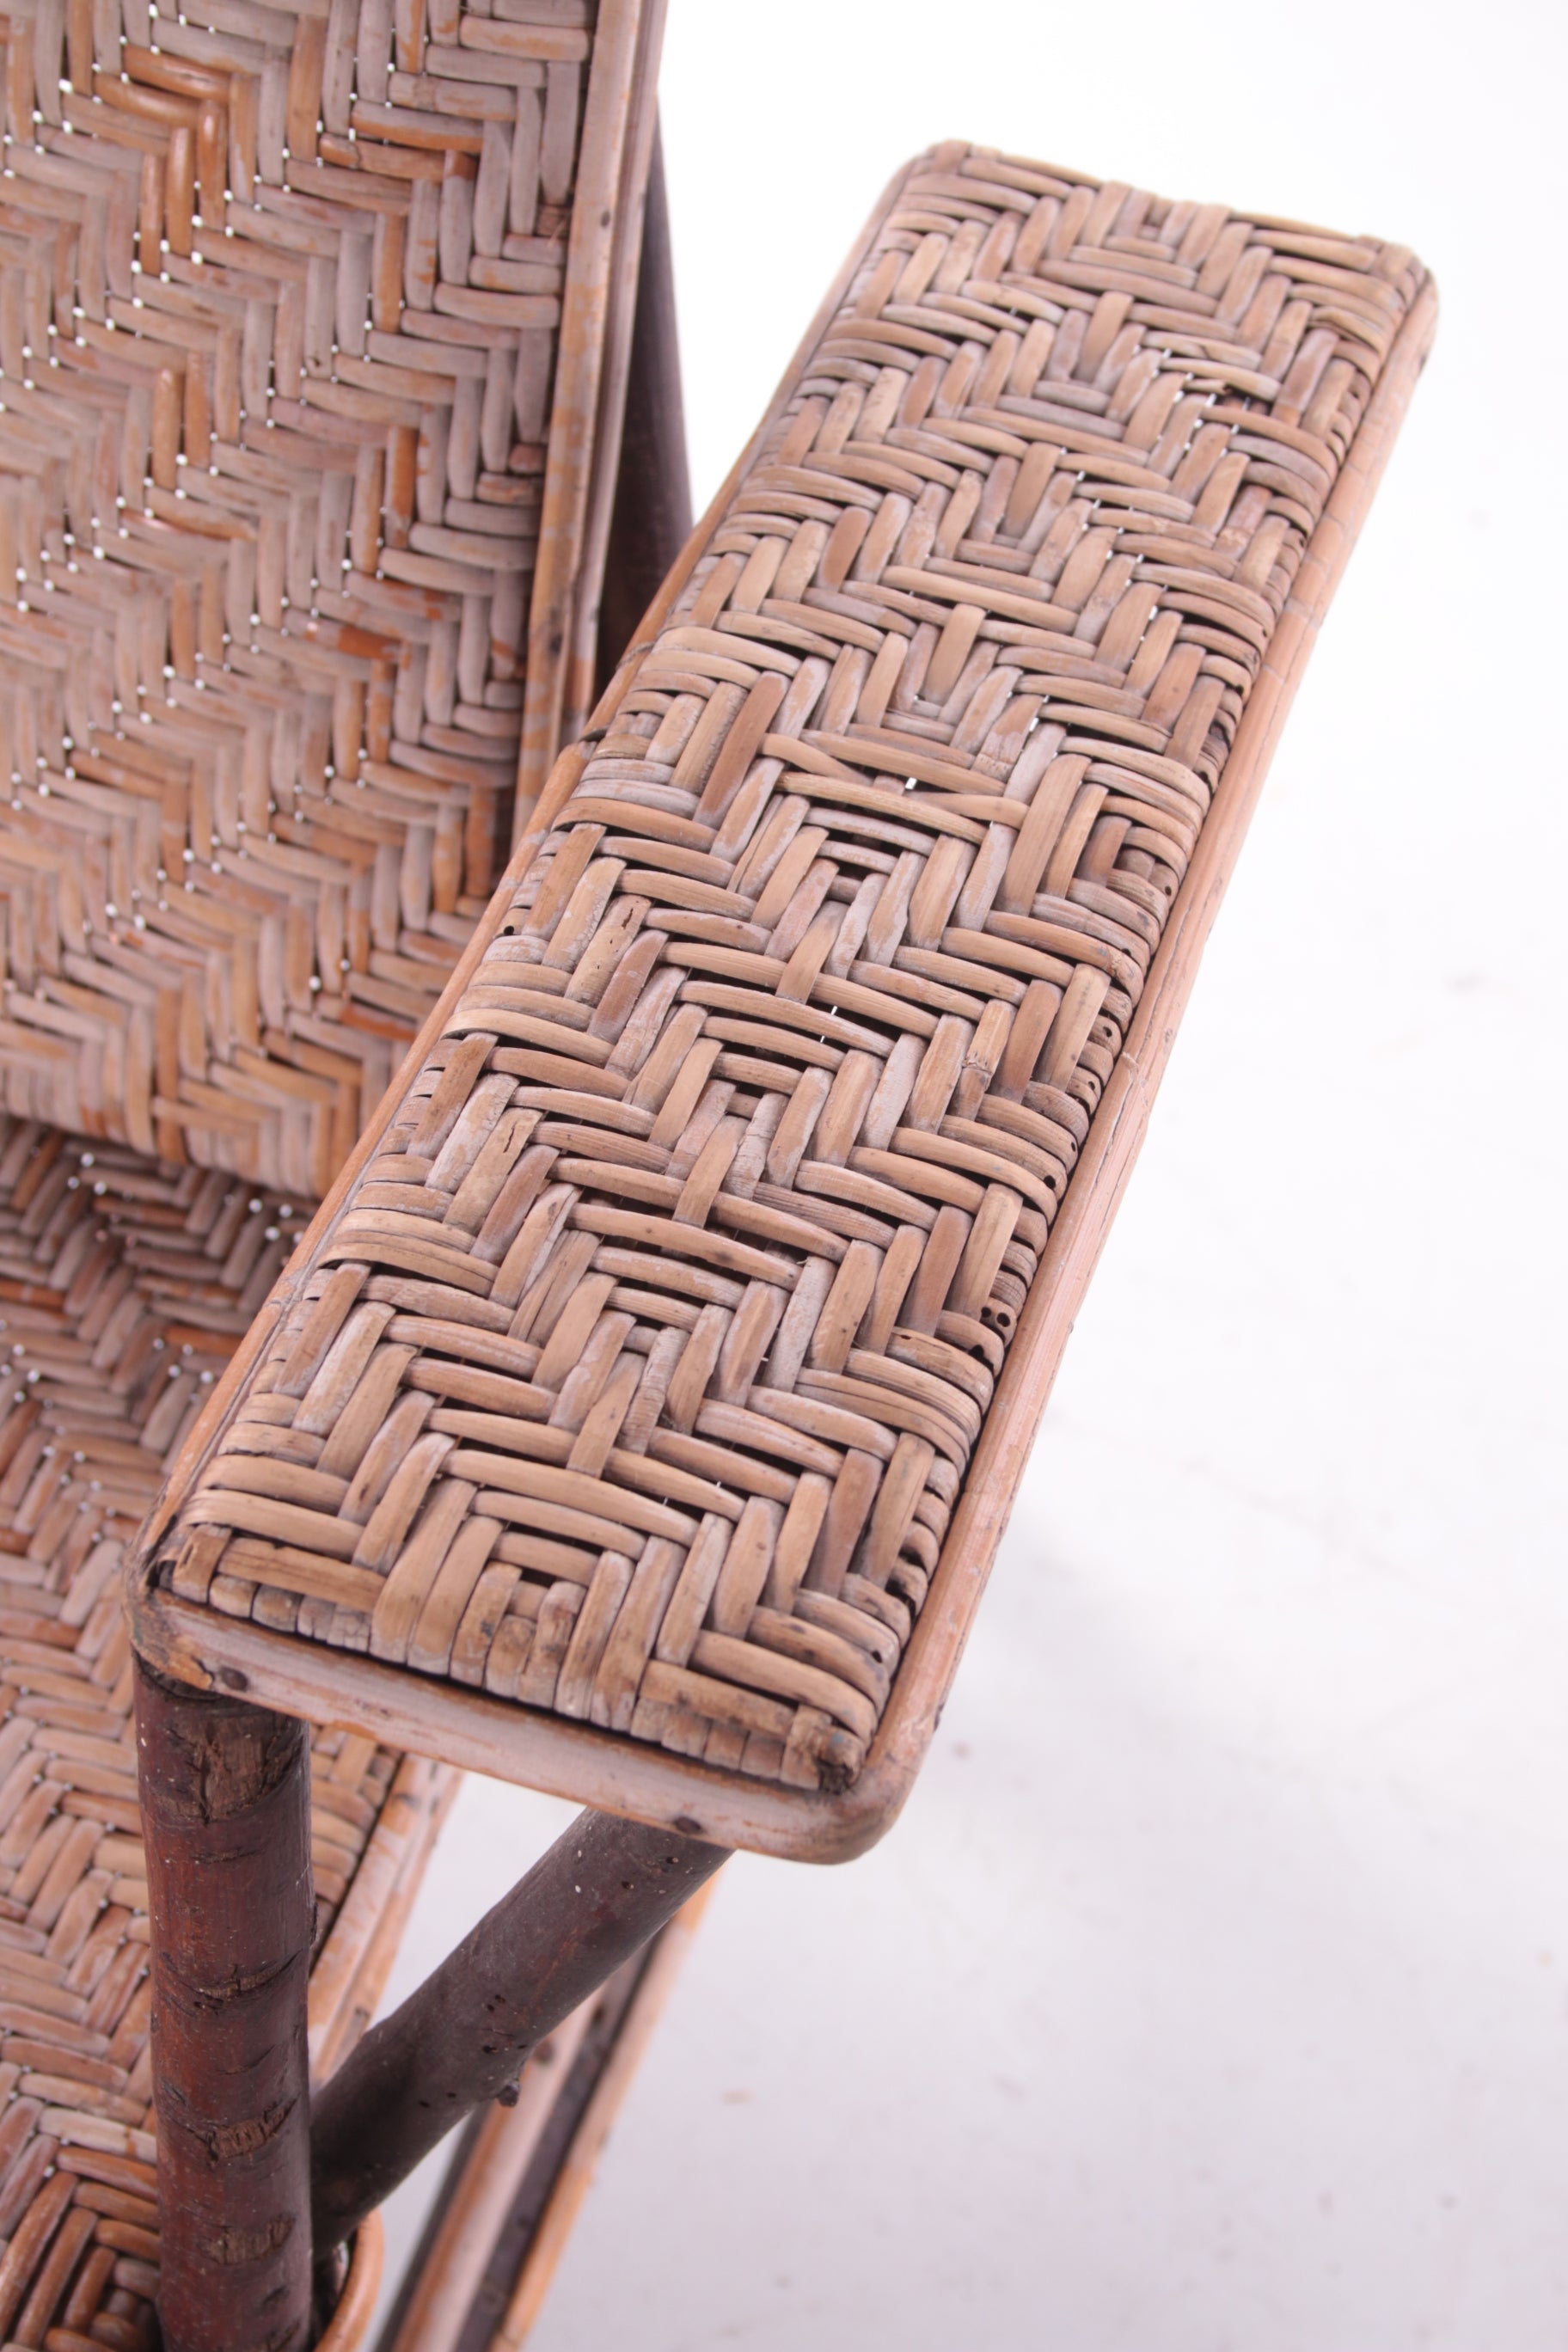 Spaanse bamboe en rieten opklapbare loungestoel uit de jaren 60 detail armleuning